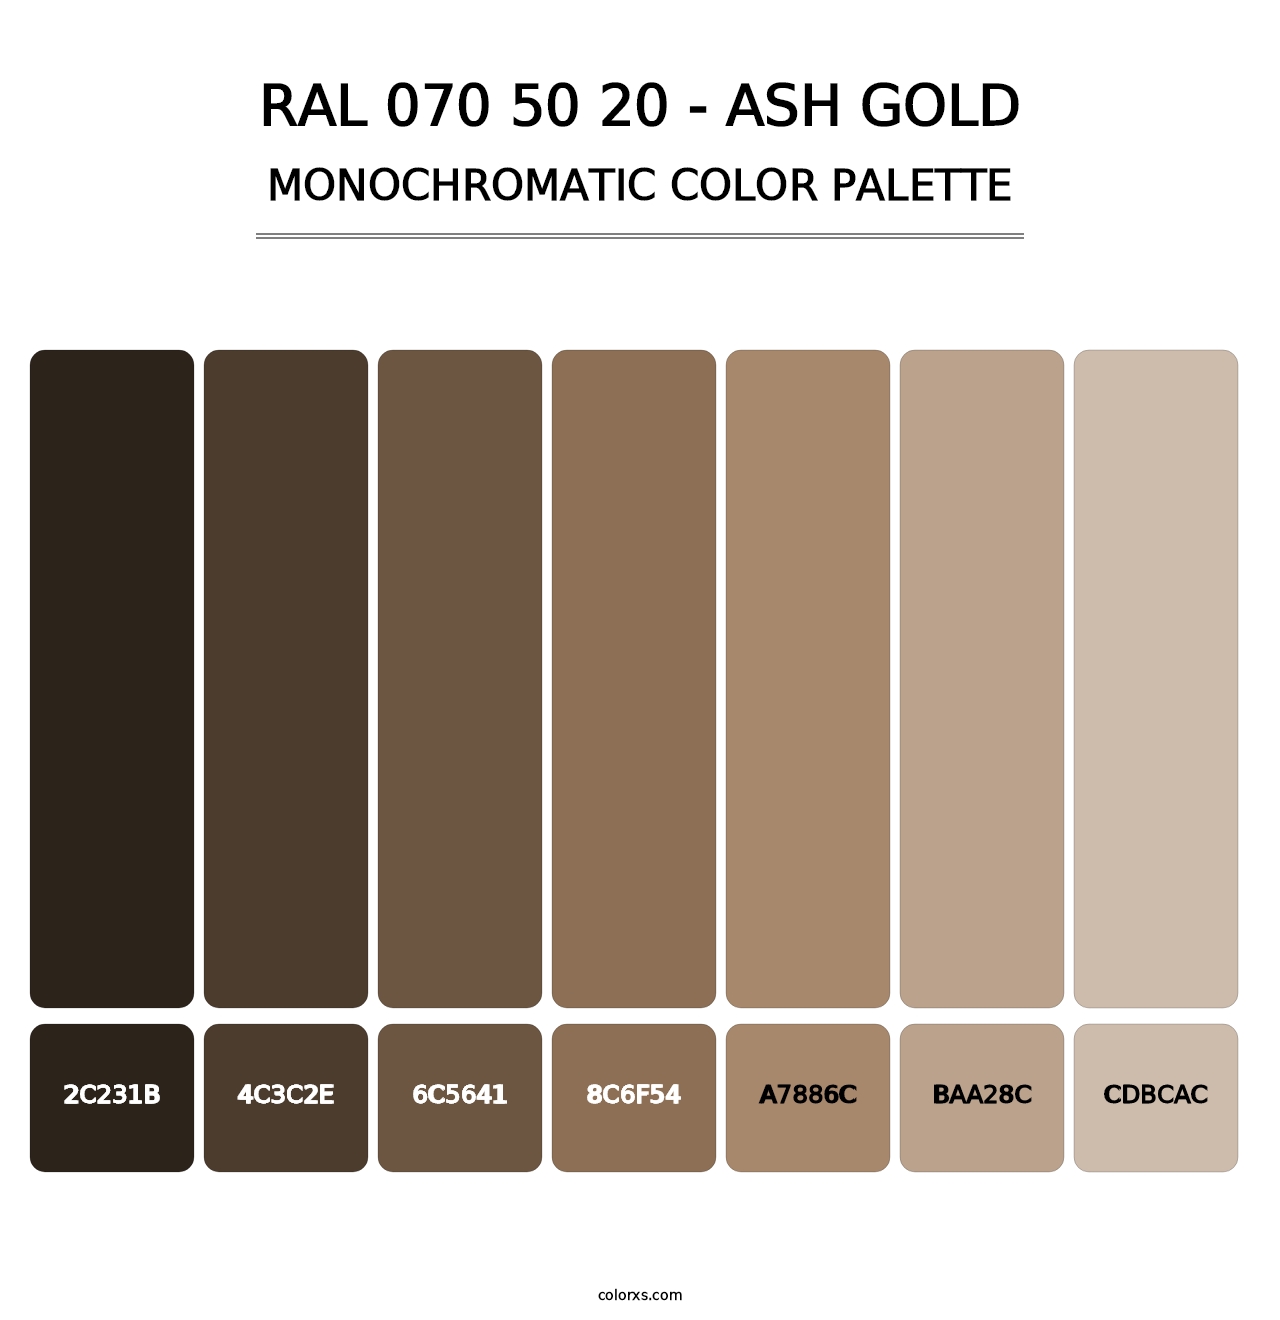 RAL 070 50 20 - Ash Gold - Monochromatic Color Palette